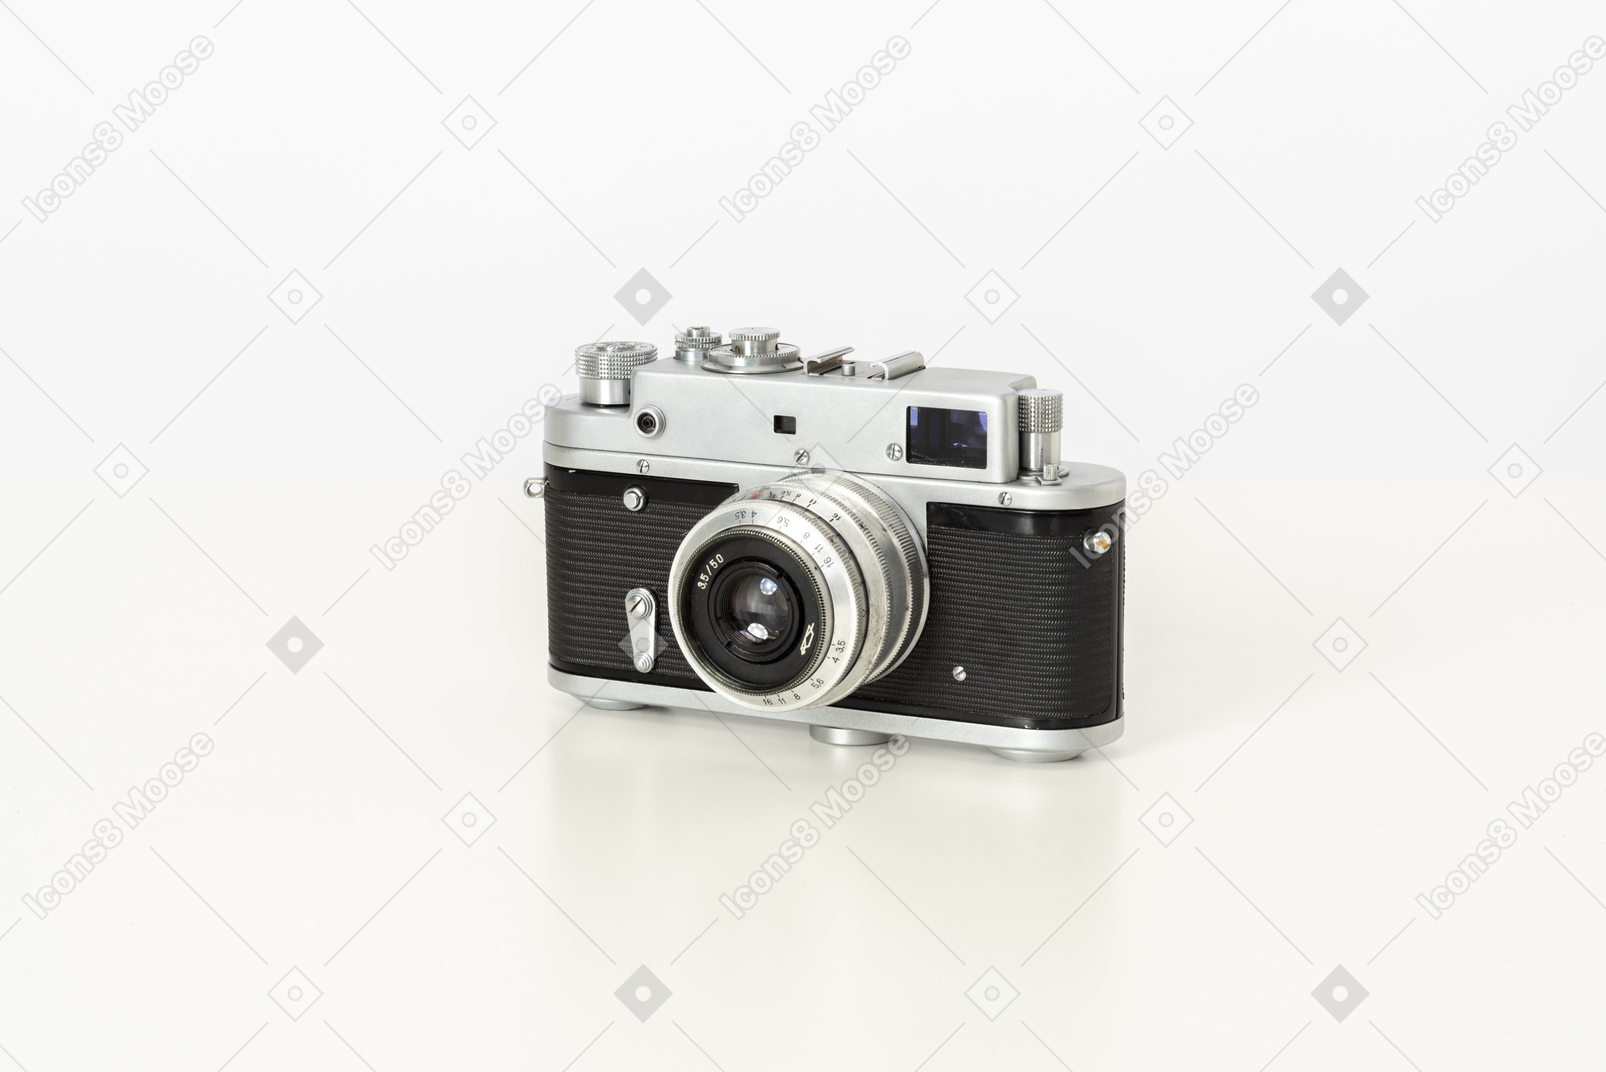 Photo camera on a white background